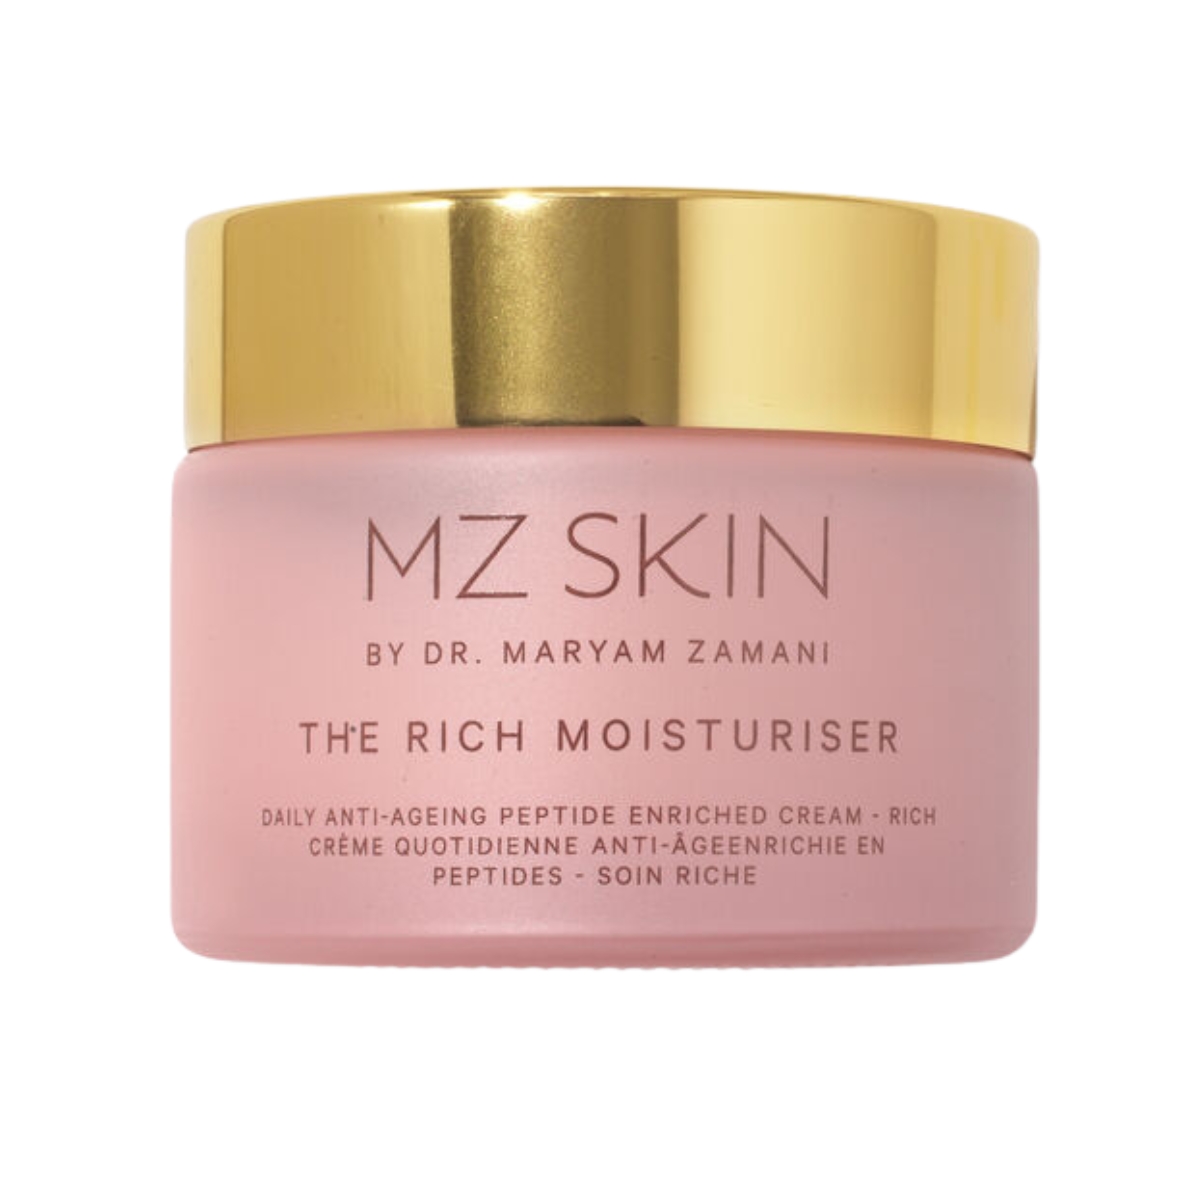 MZ Skin The Rich Moisturiser